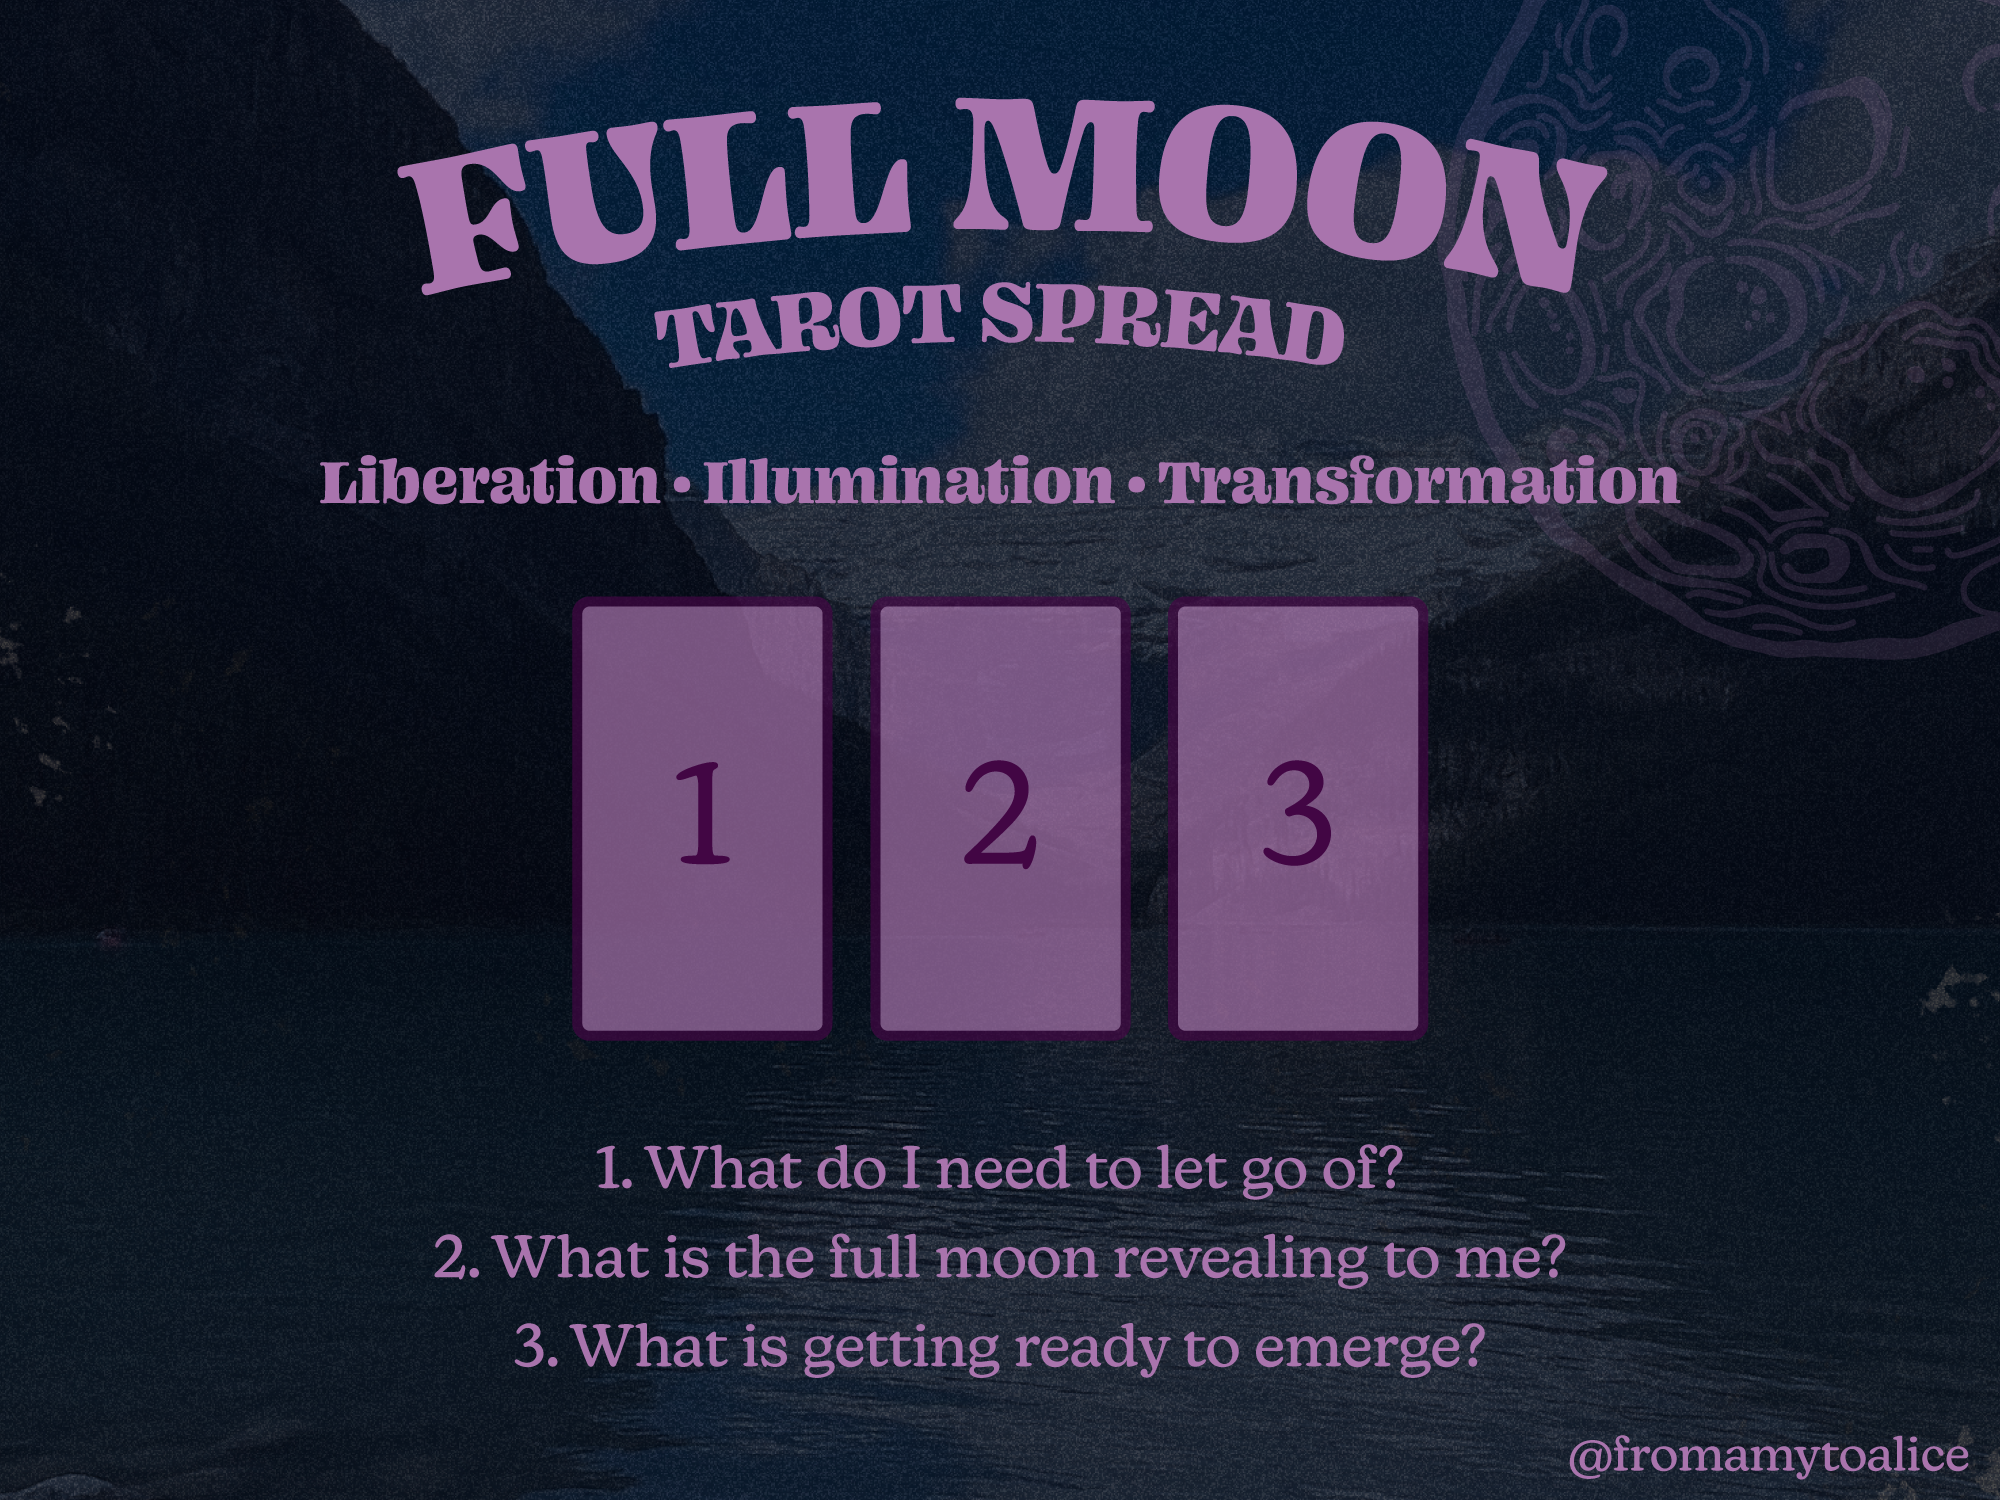 Full Moon Tarot Spread